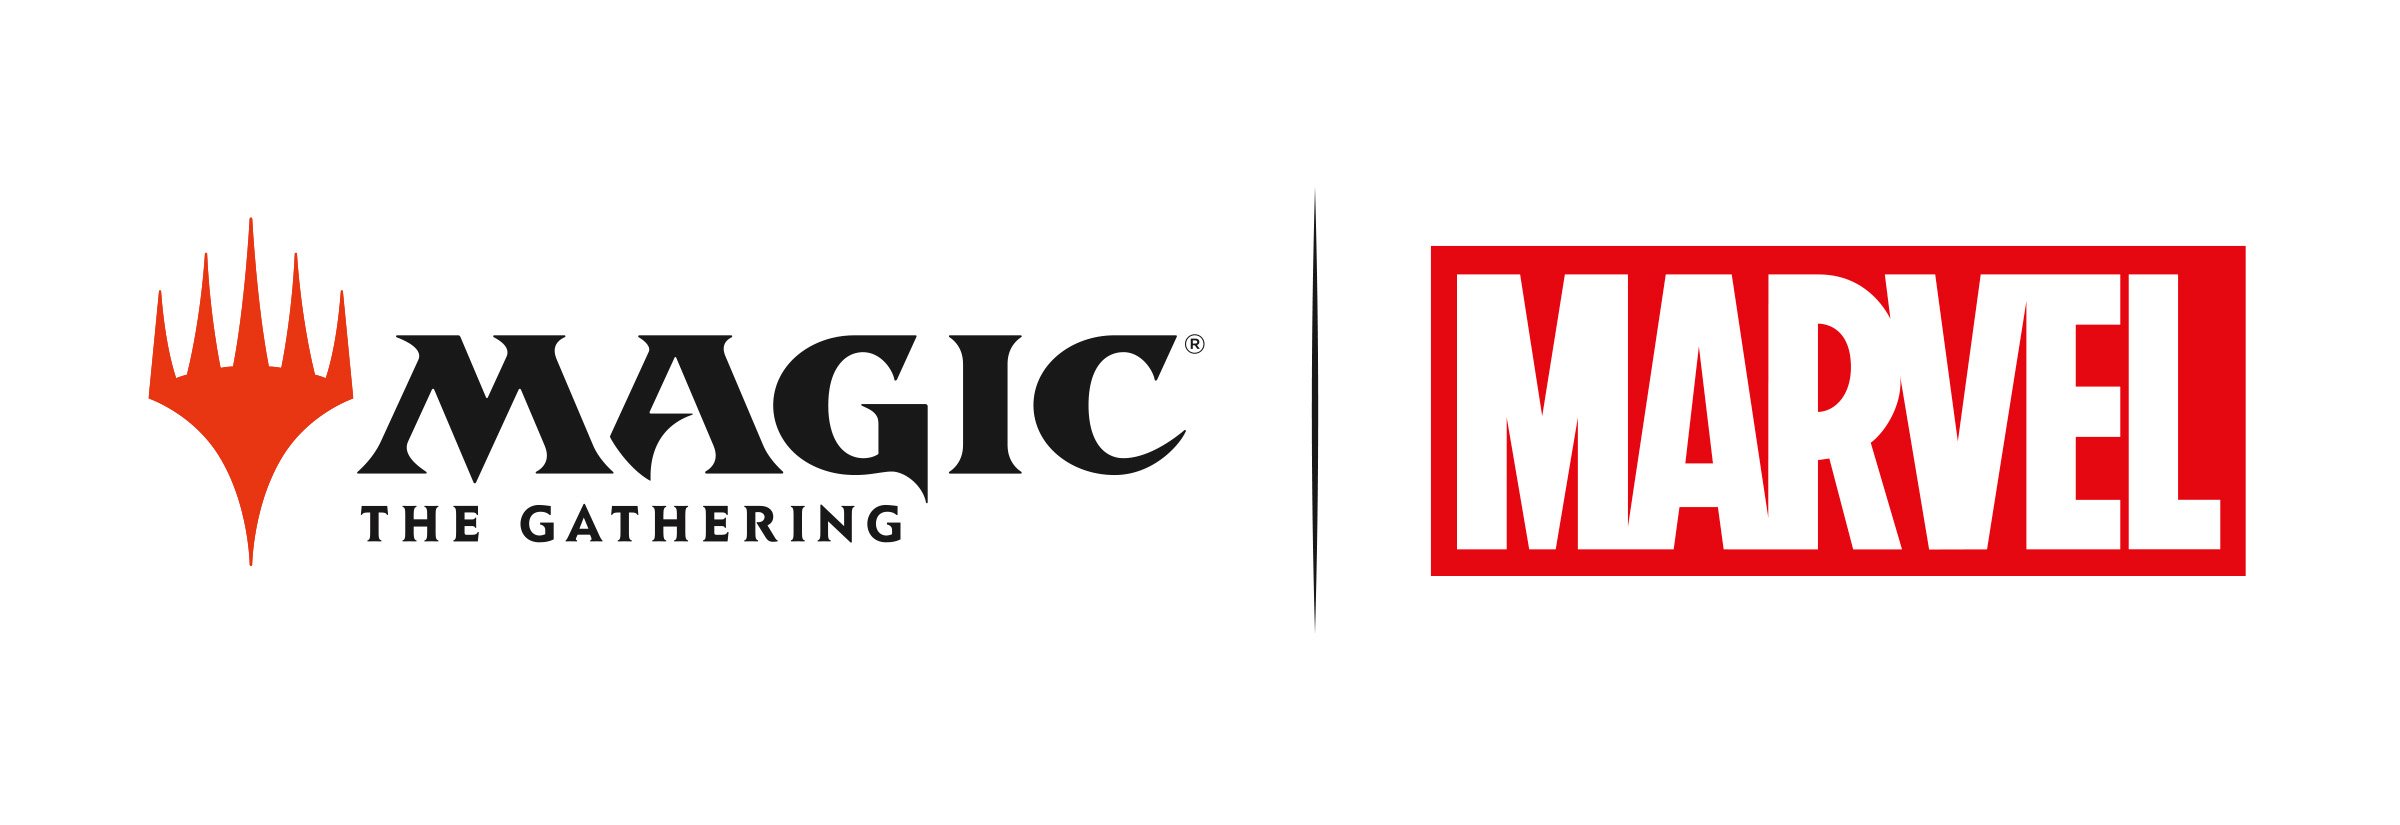 Afbeelding van MTG- en Marvel-logo's samen via Universes Beyond-crossover